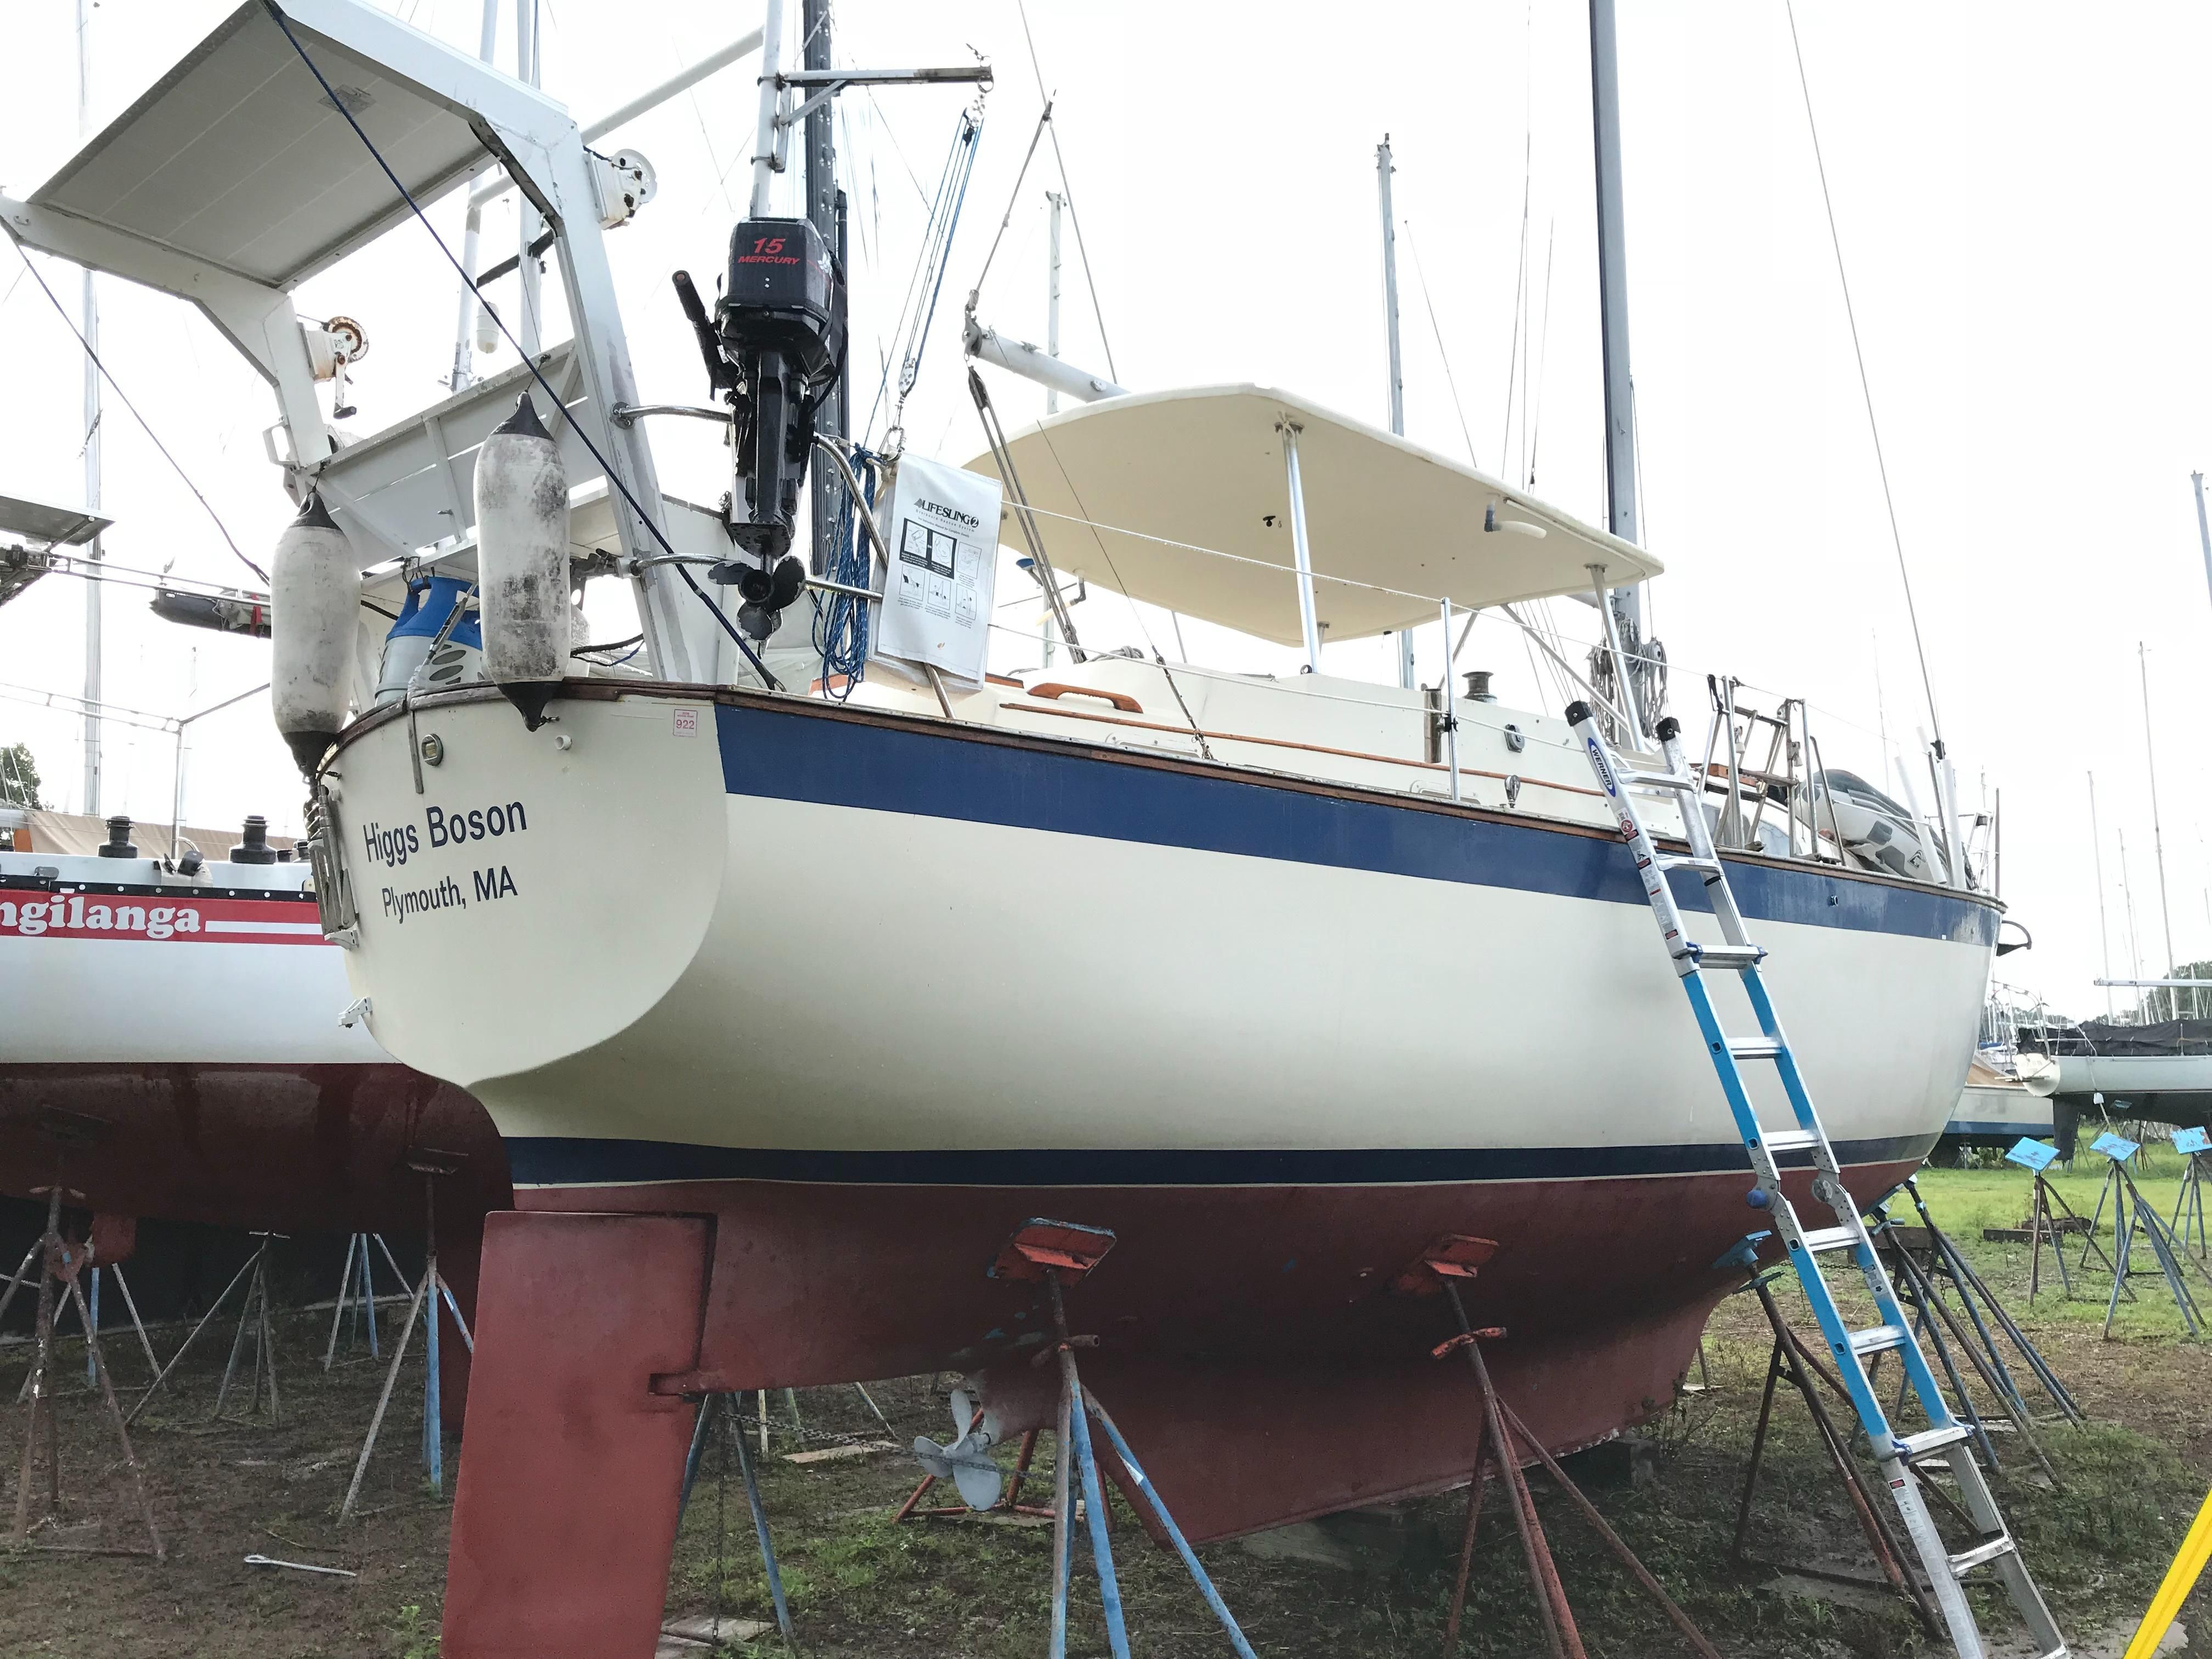 irwin yachts northern ireland for sale